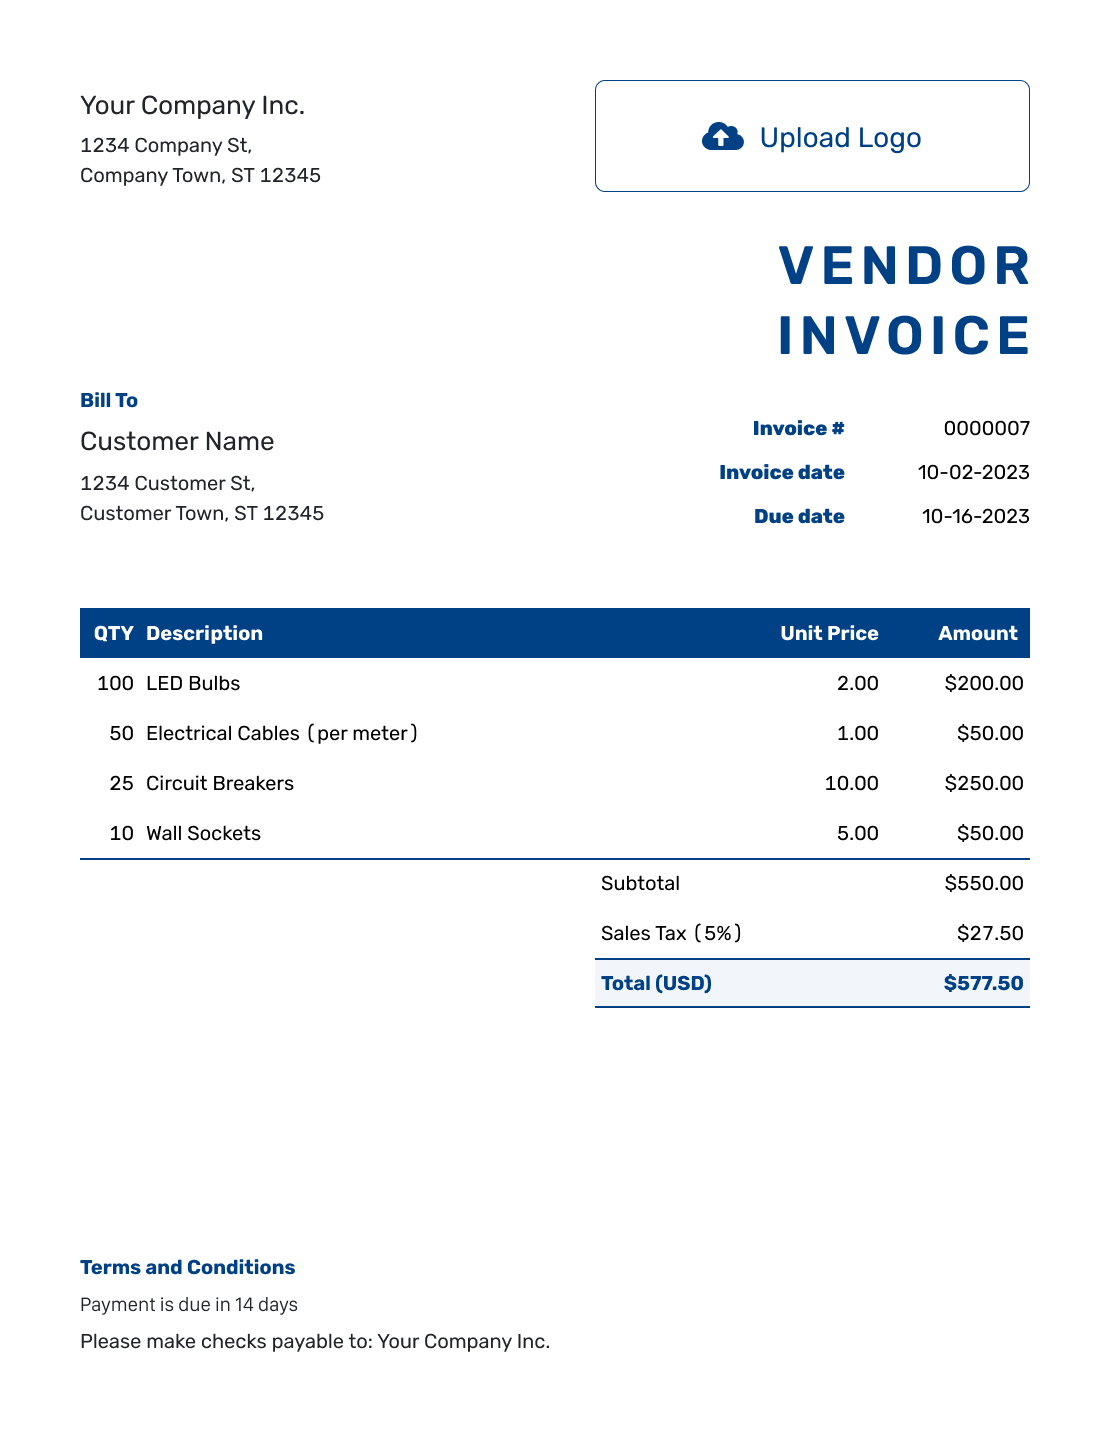 Sample Vendor Invoice Template